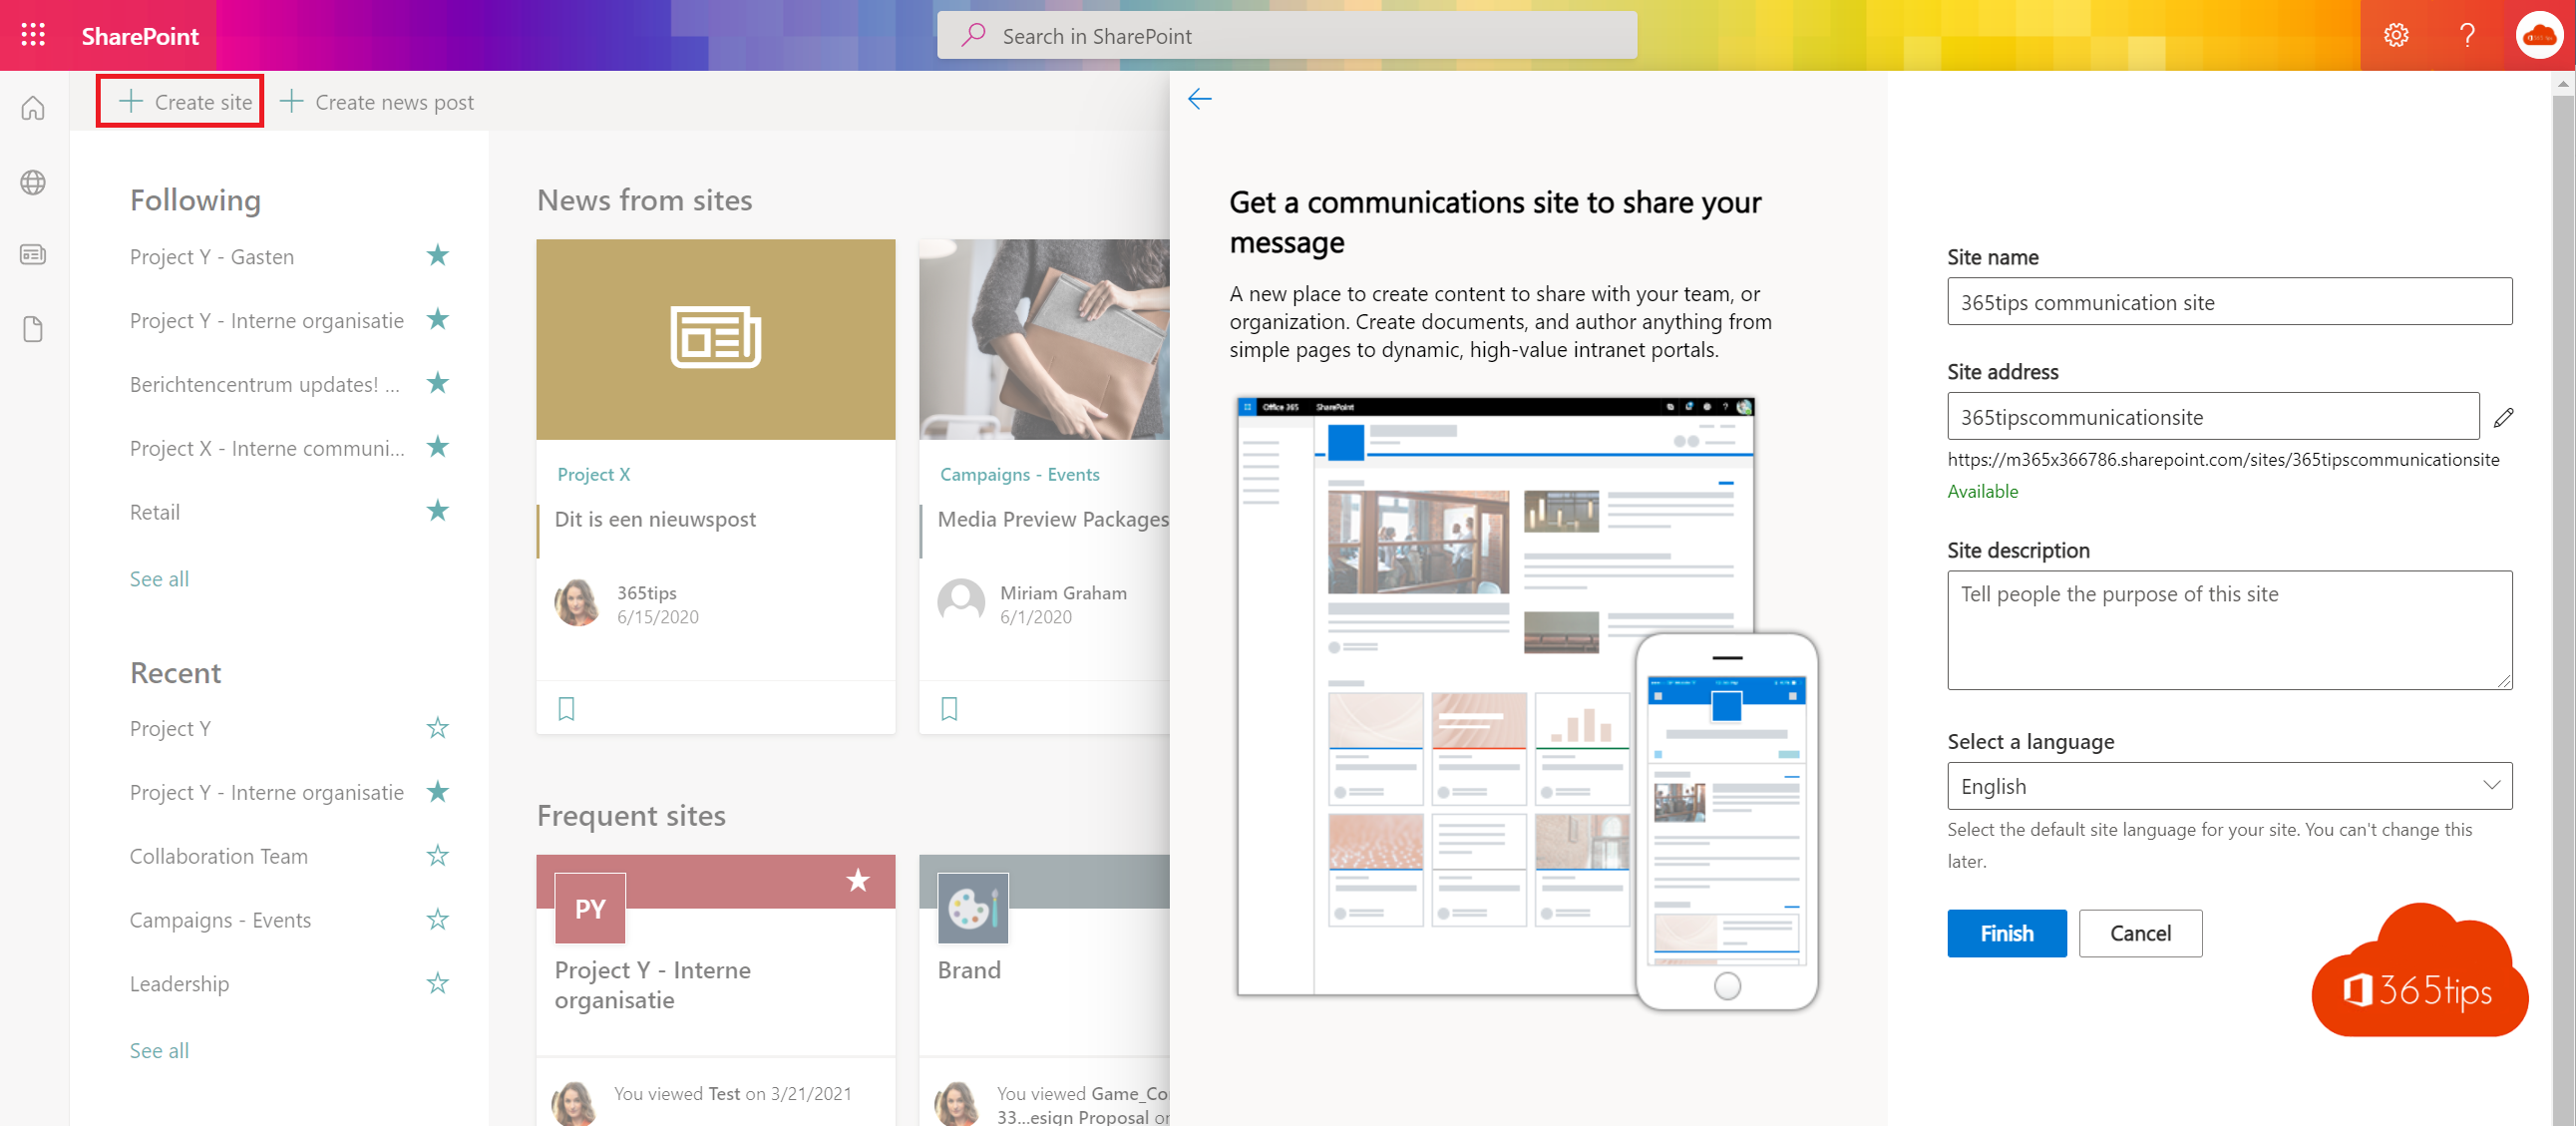 Tutorial: Cómo crear un sitio de comunicación en SharePoint Online  &amp; Microsoft Teams